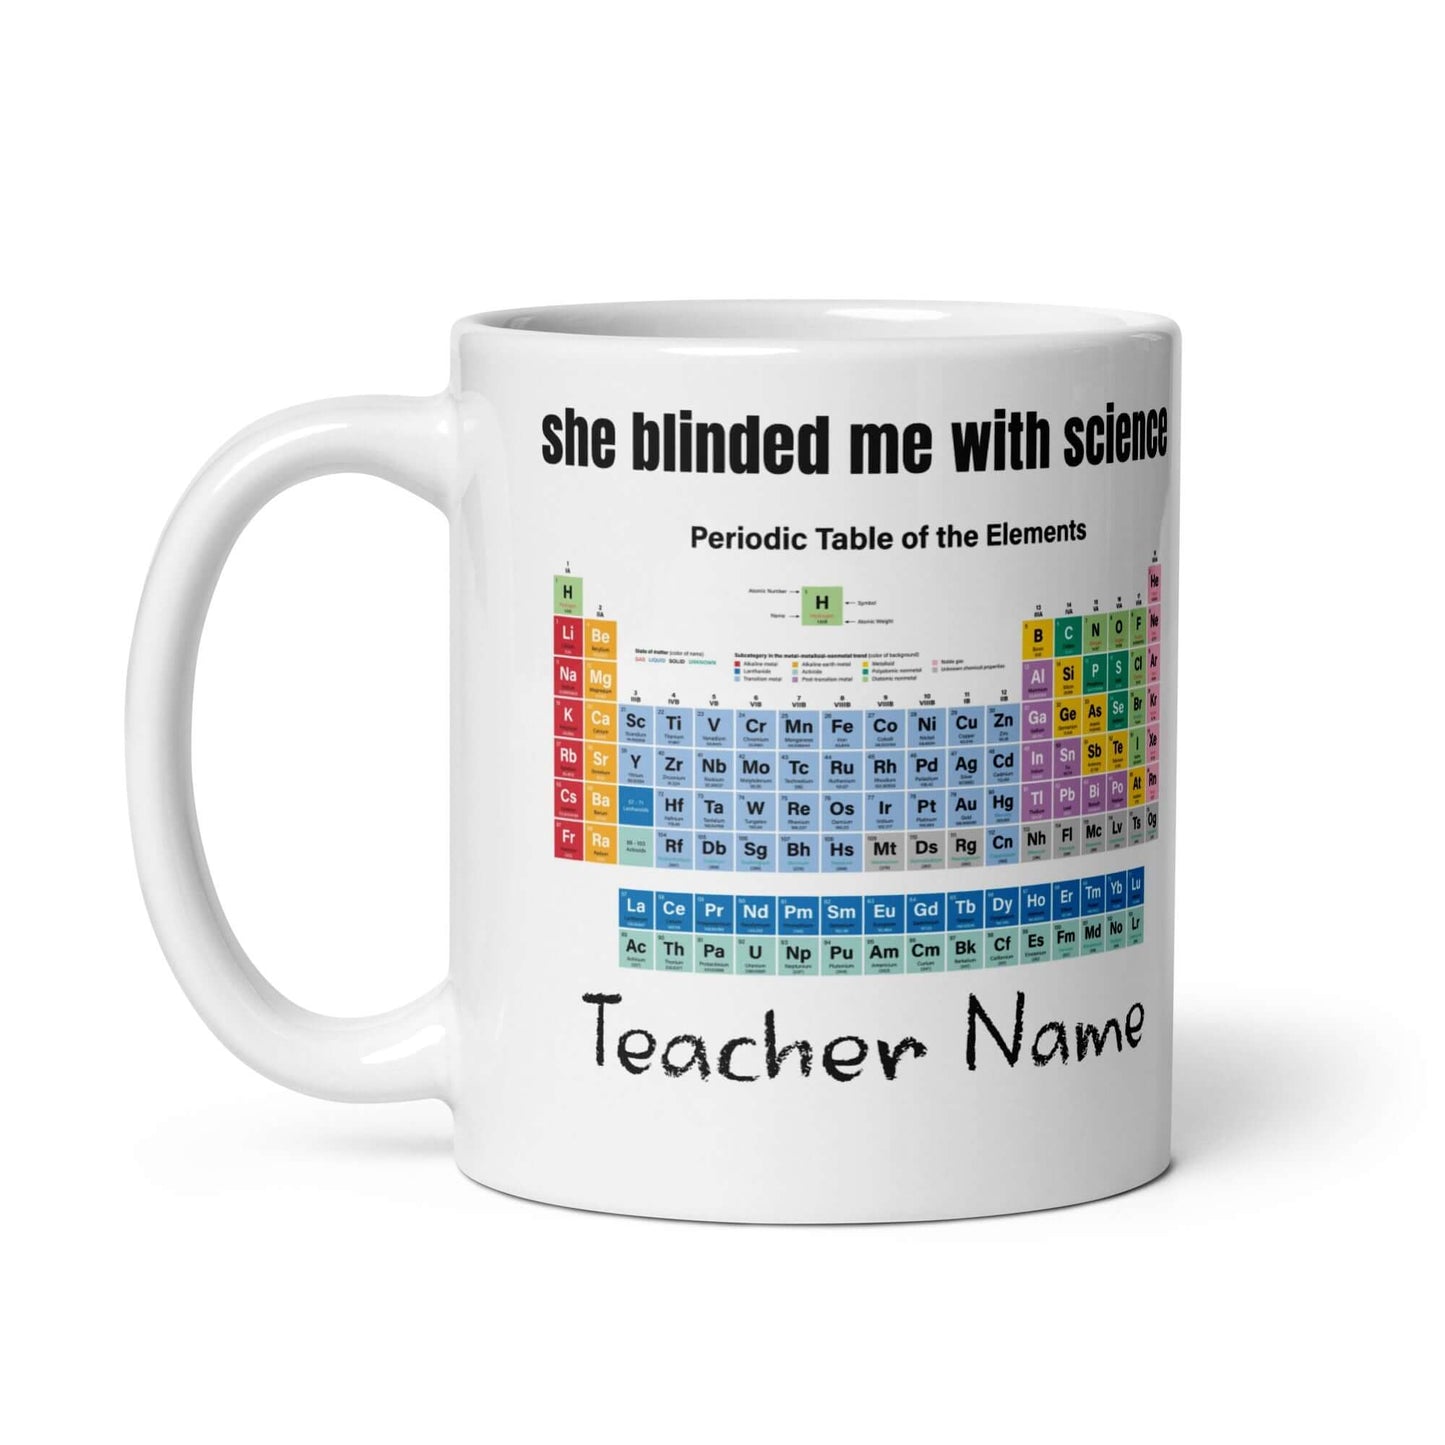 Science Teacher - White glossy mug end of year school school gift science teacher teacher teacher appreciation teacher gift